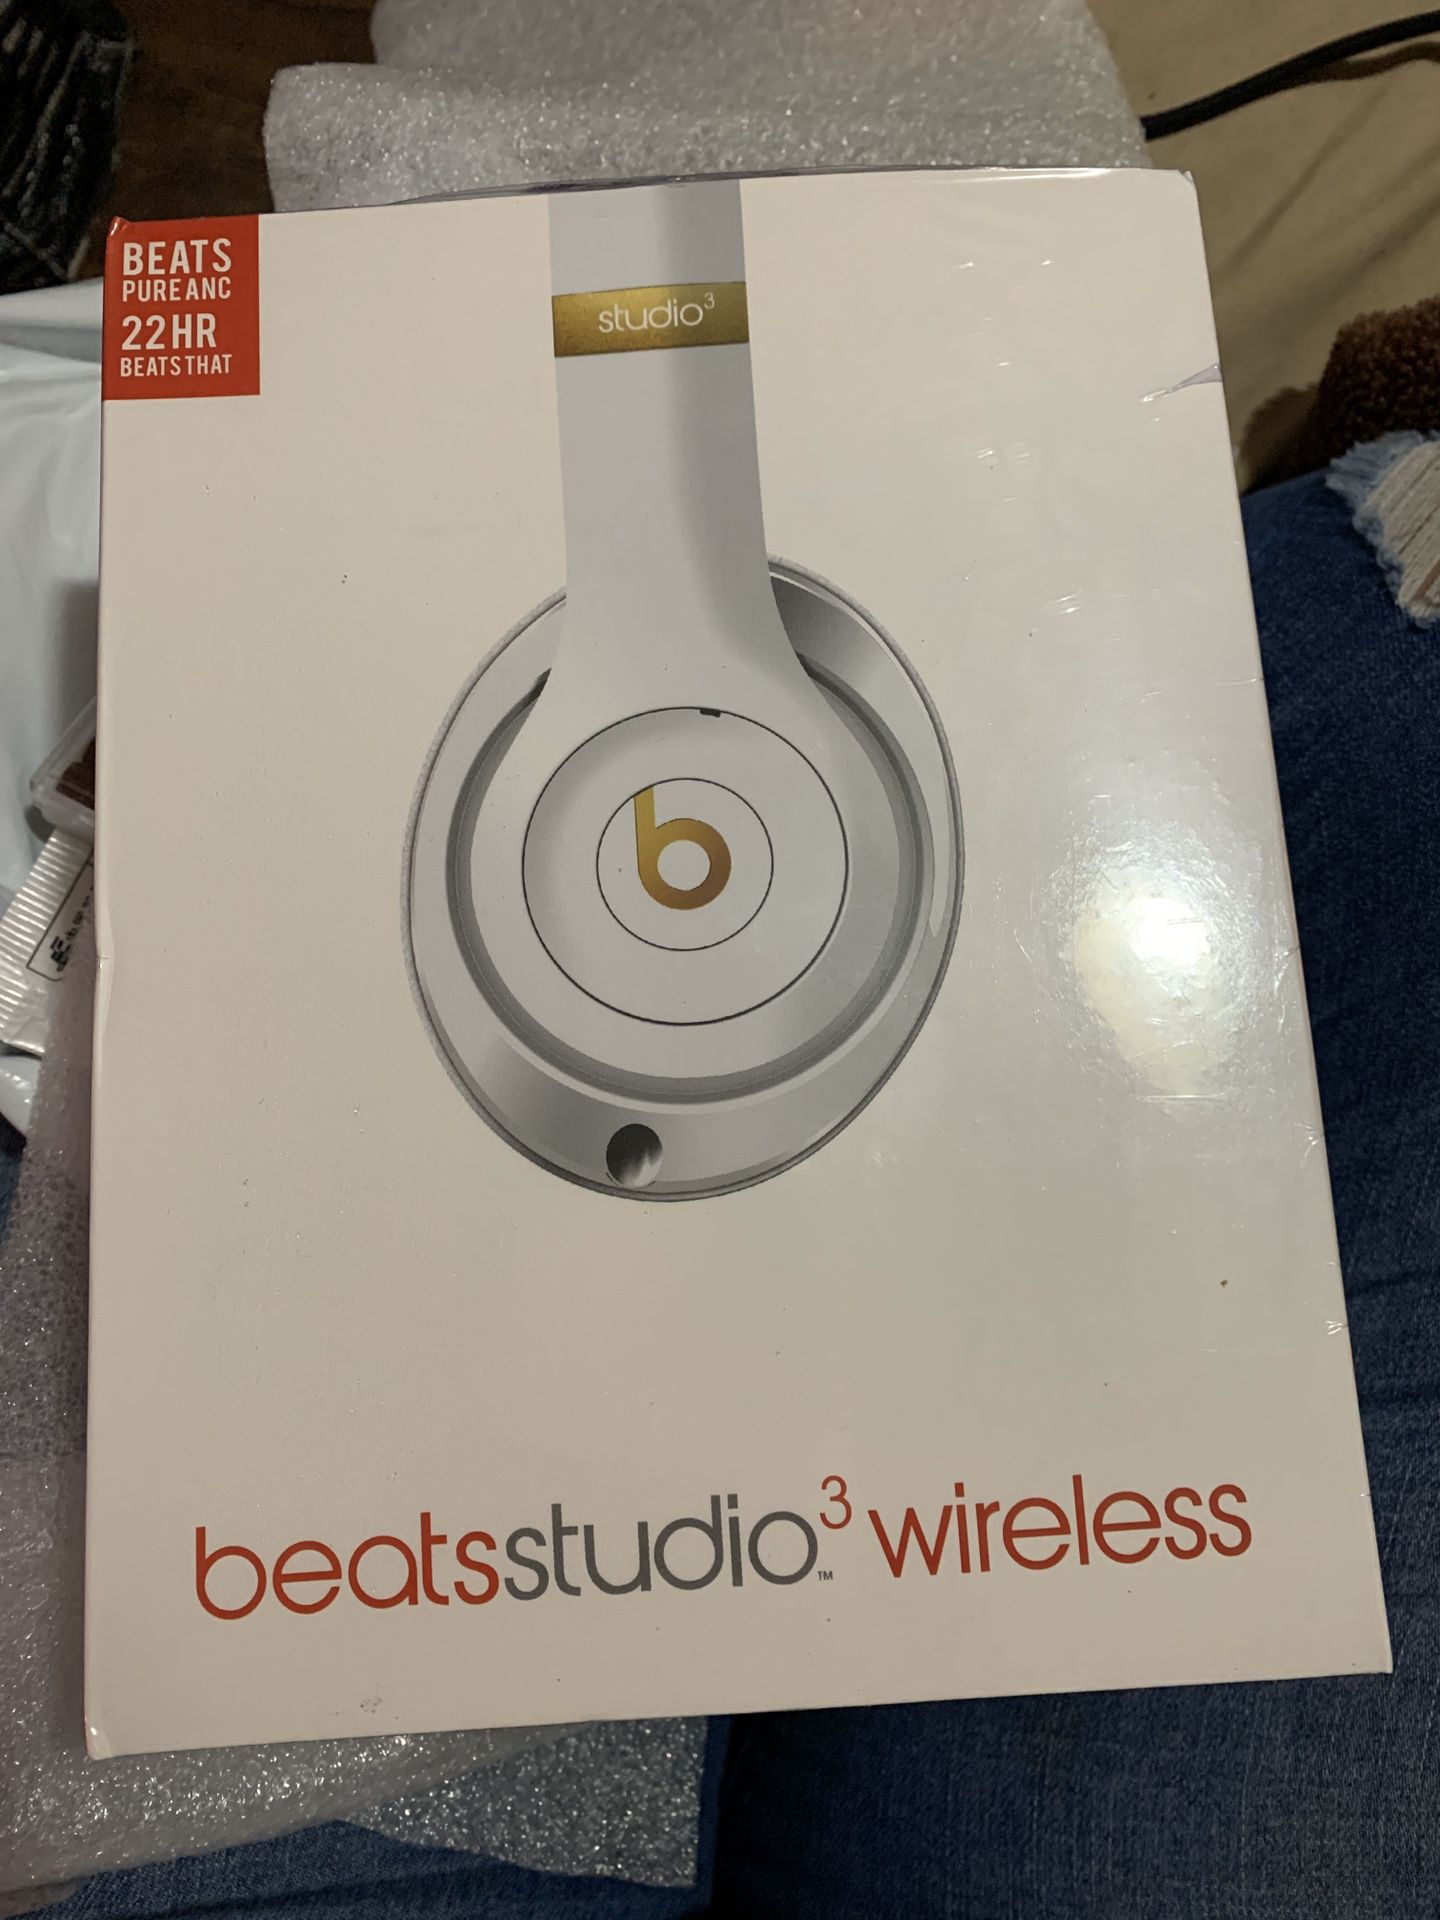 Beat studio 3 wireless headphones